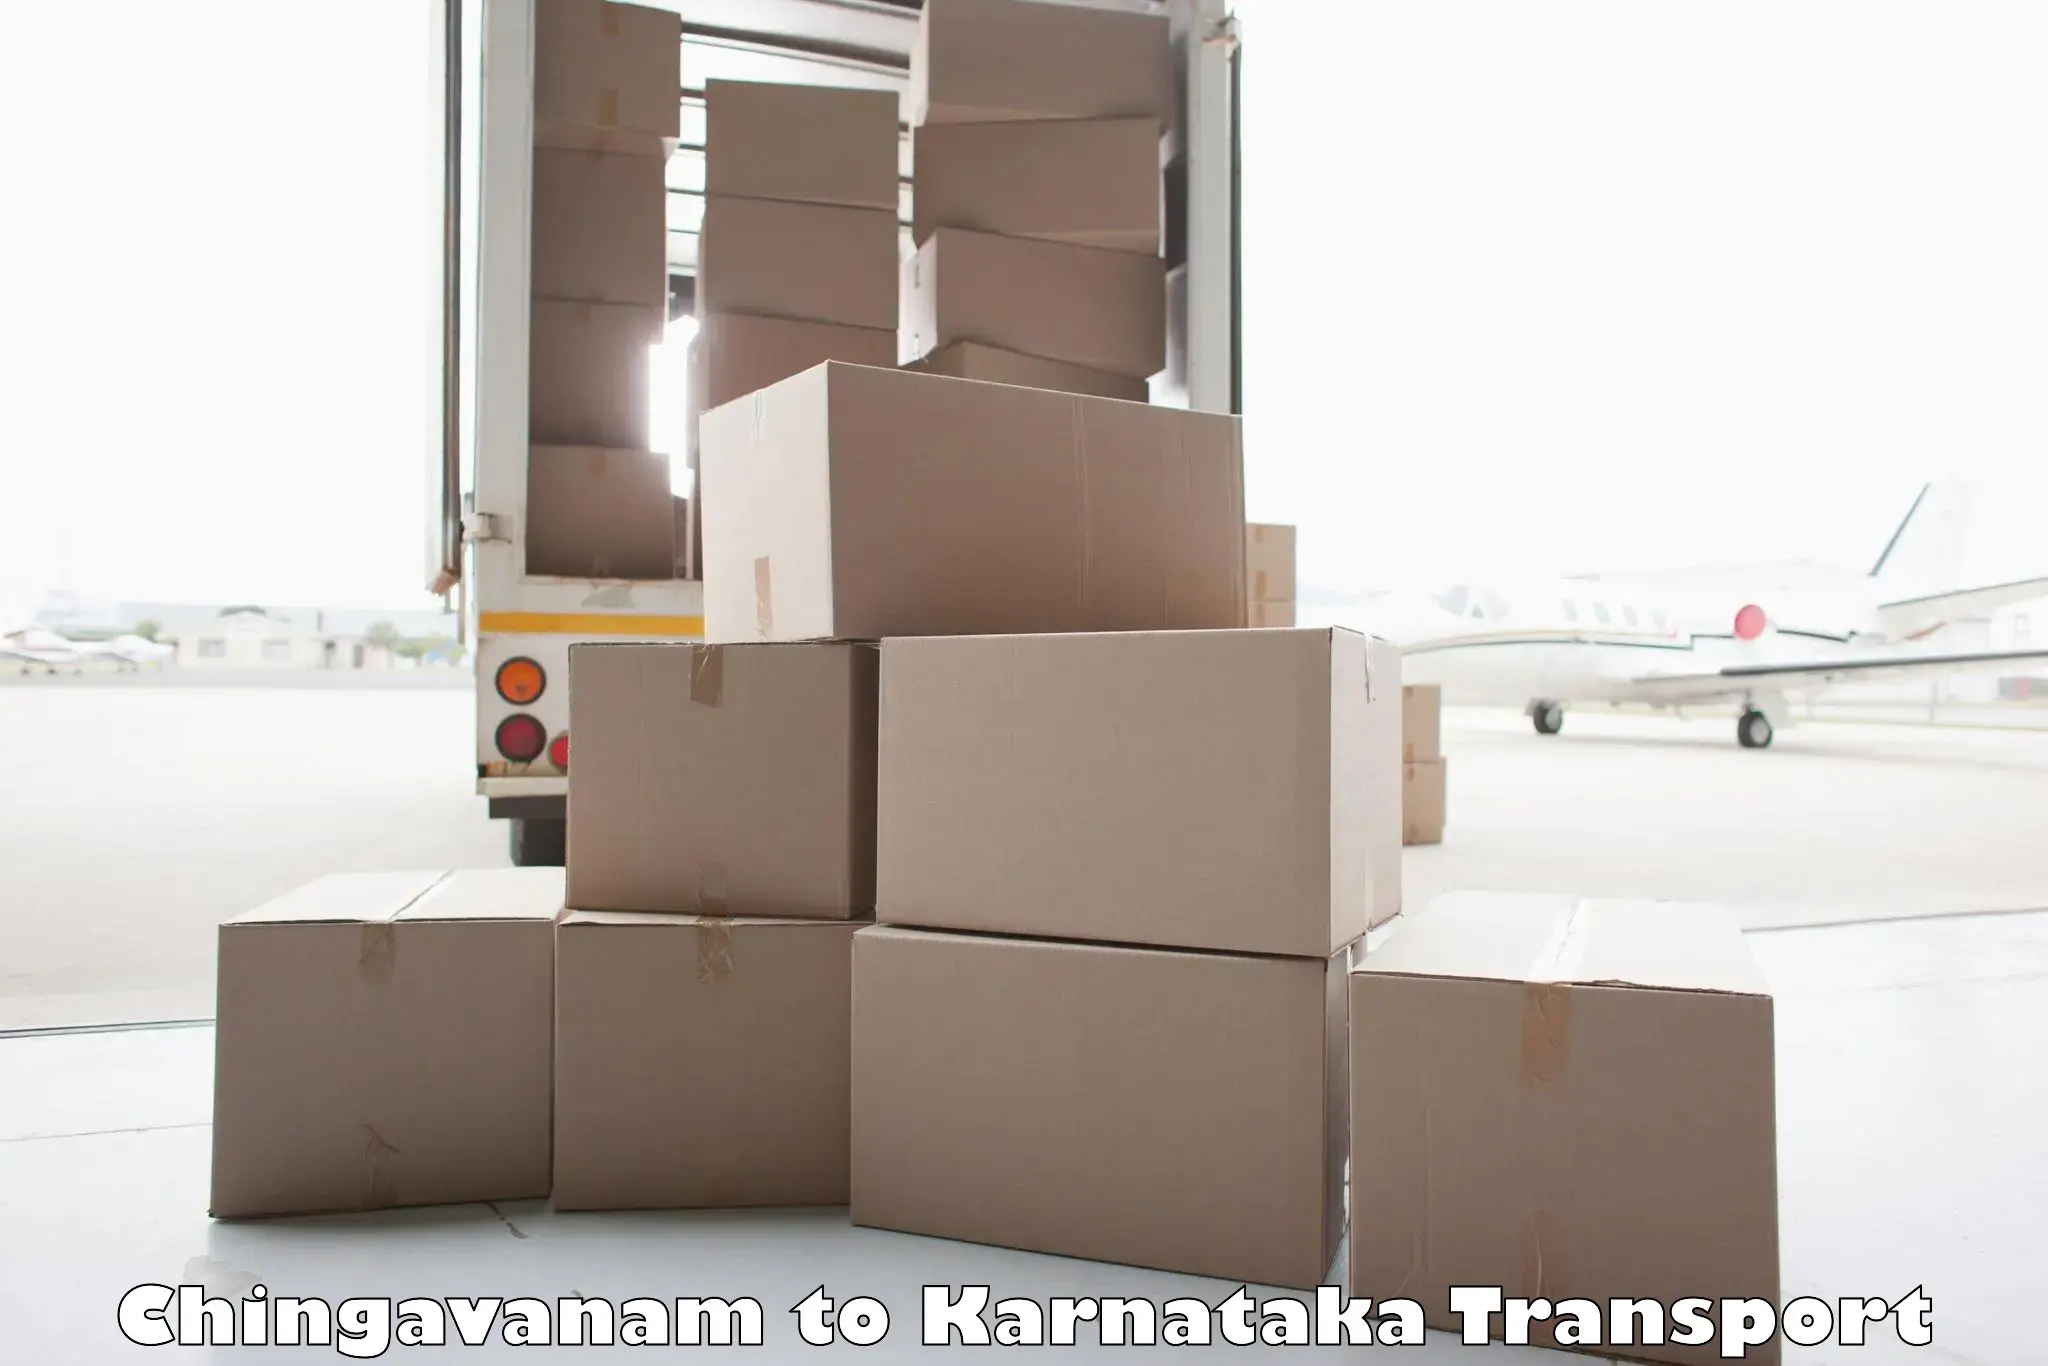 Container transport service Chingavanam to Bangalore